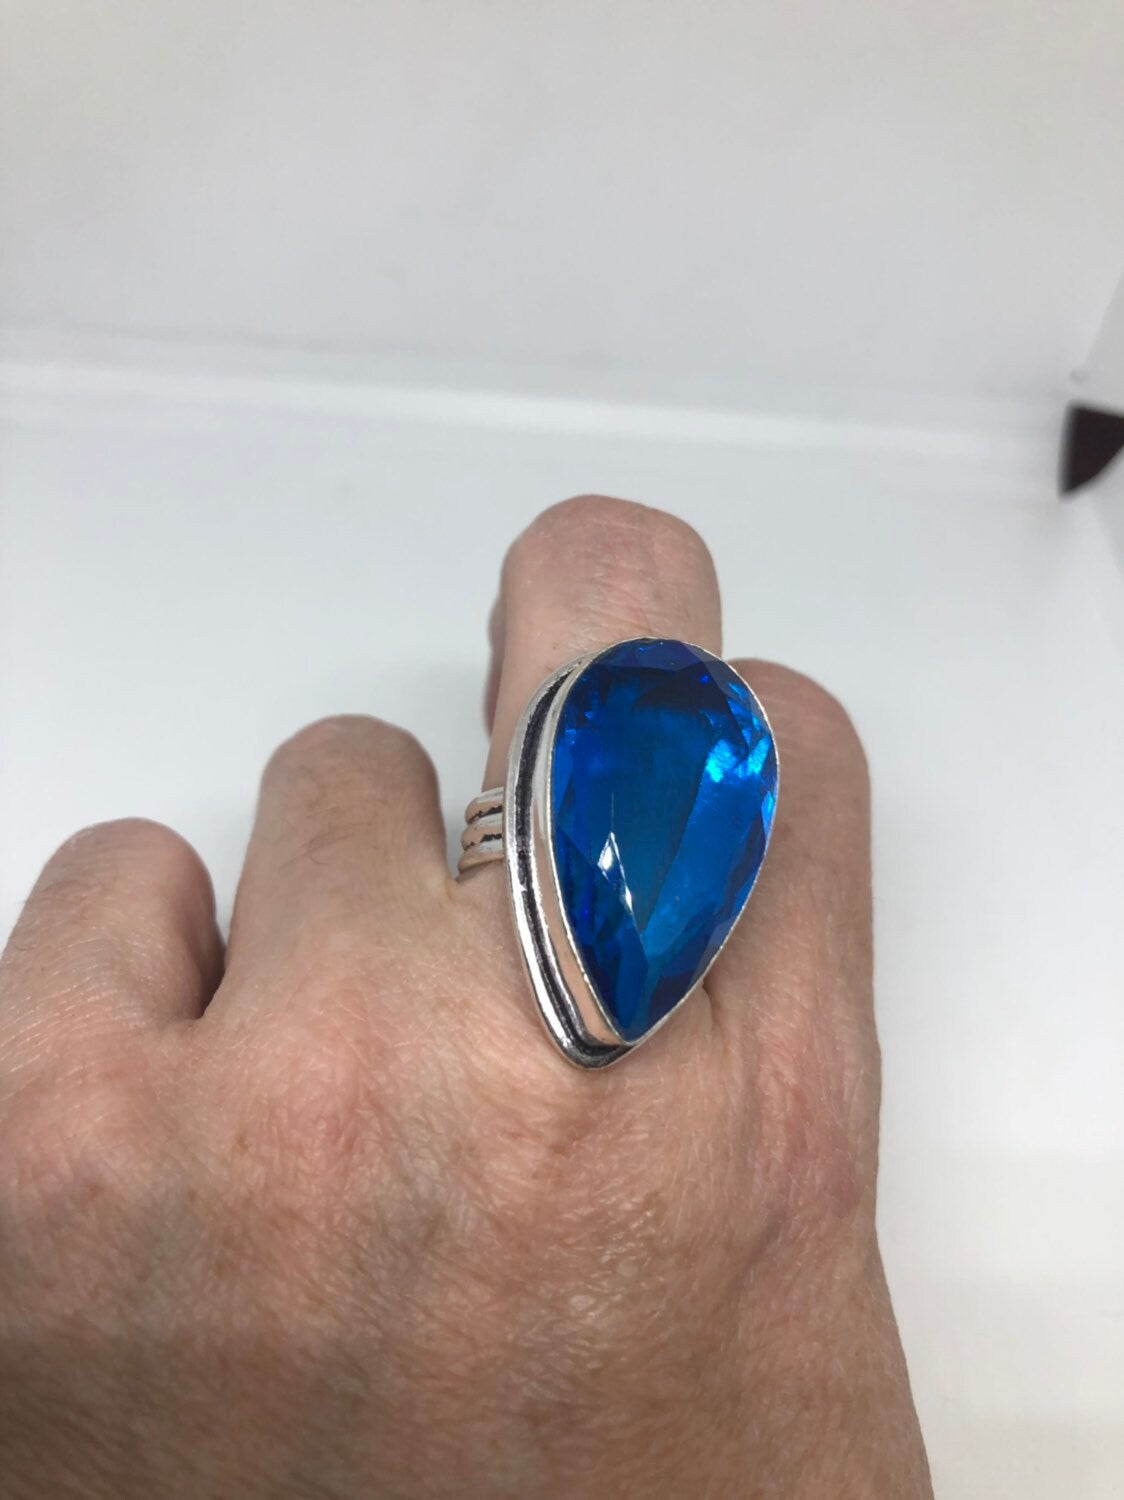 Vintage Aqua Turquoise Vintage Art Glass Ring 1.25 Long Knuckle Ring